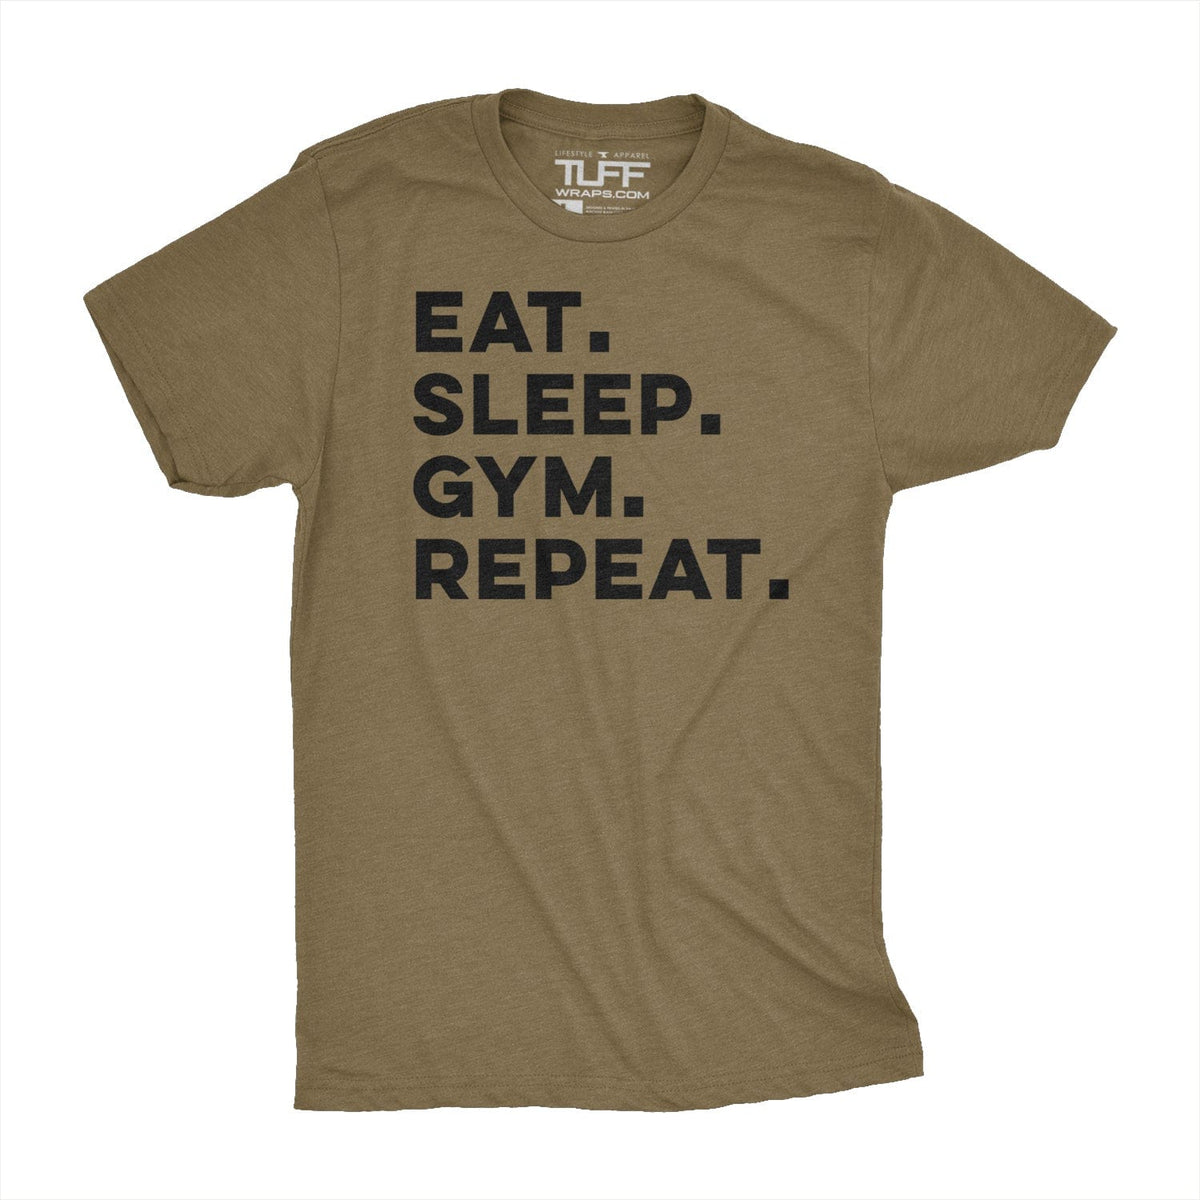 Eat. Sleep. Gym. Repeat. Tee T-shirt